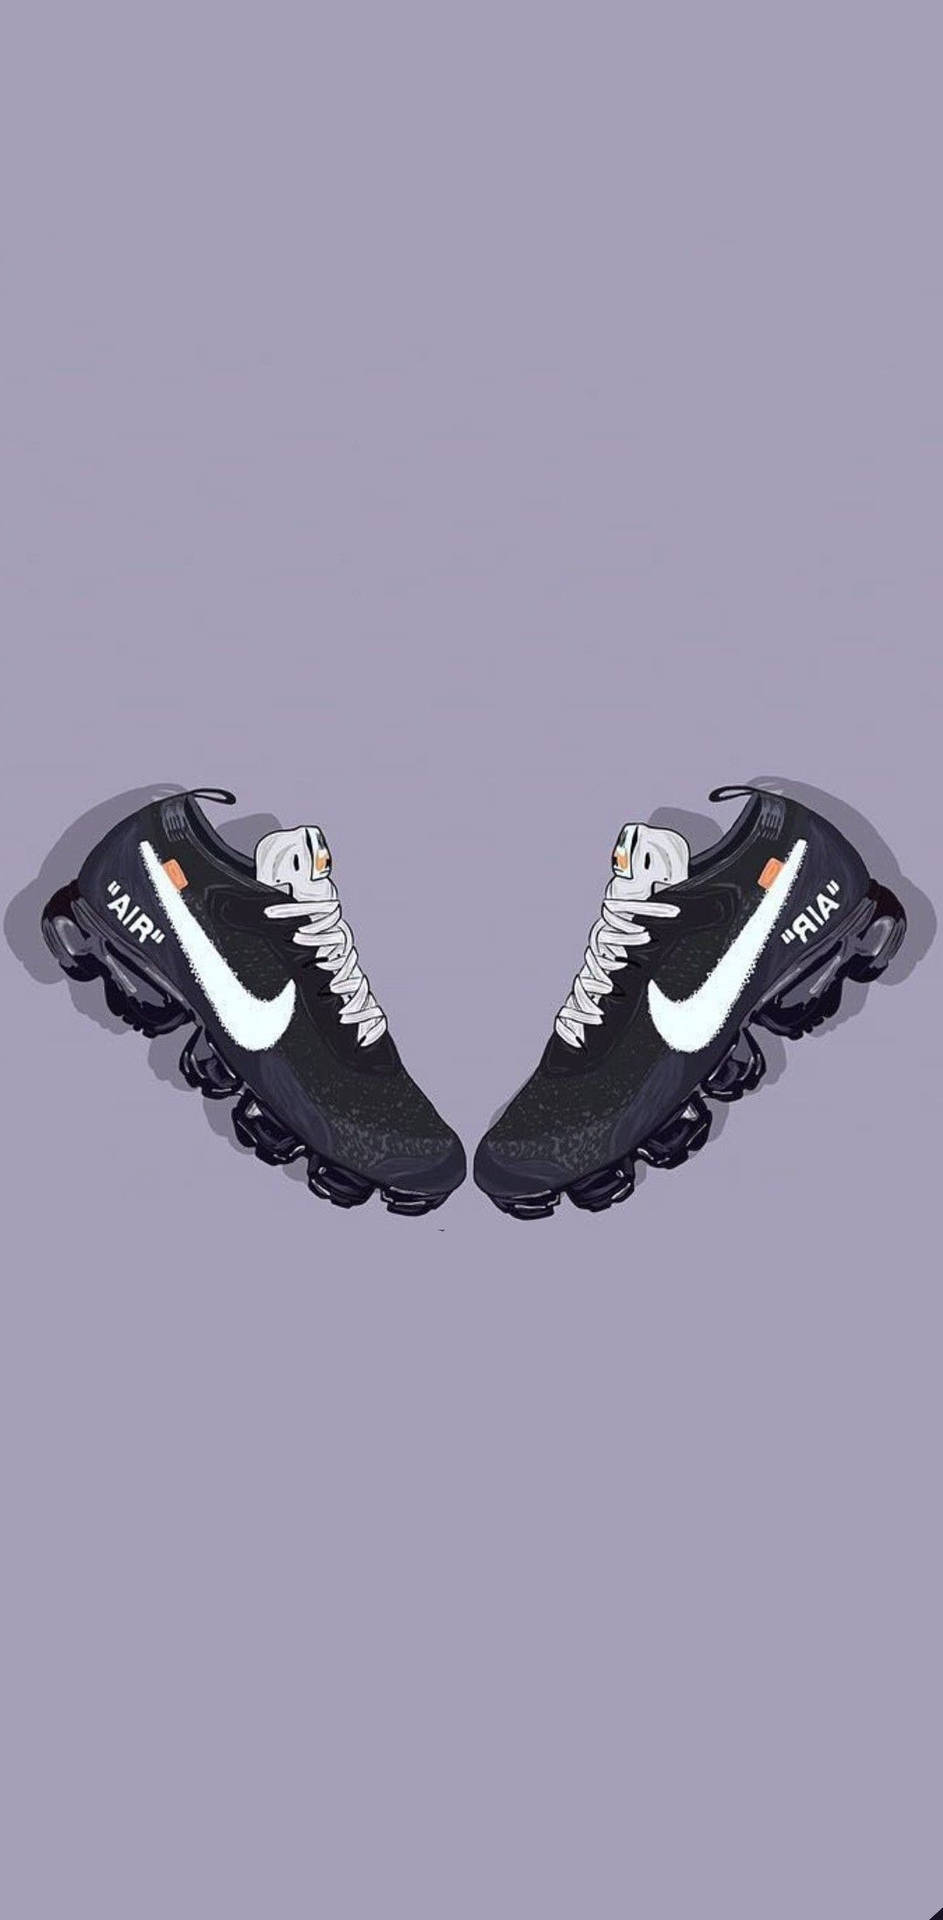 Sneaker Off-White Nike Vapormax Wallpaper